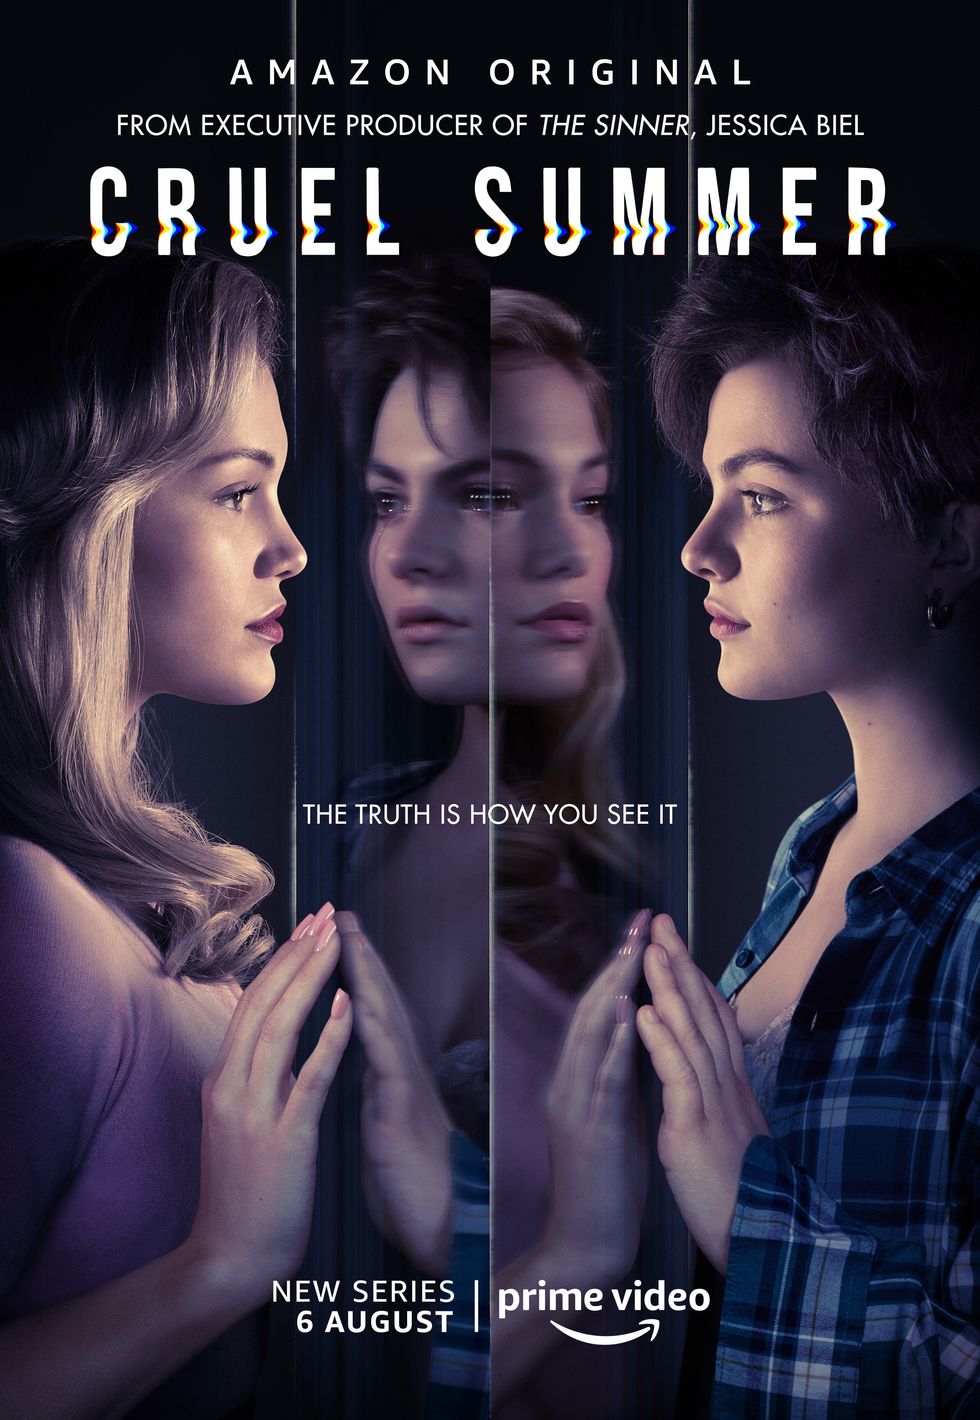 cruel summer, uk amazon prime video poster